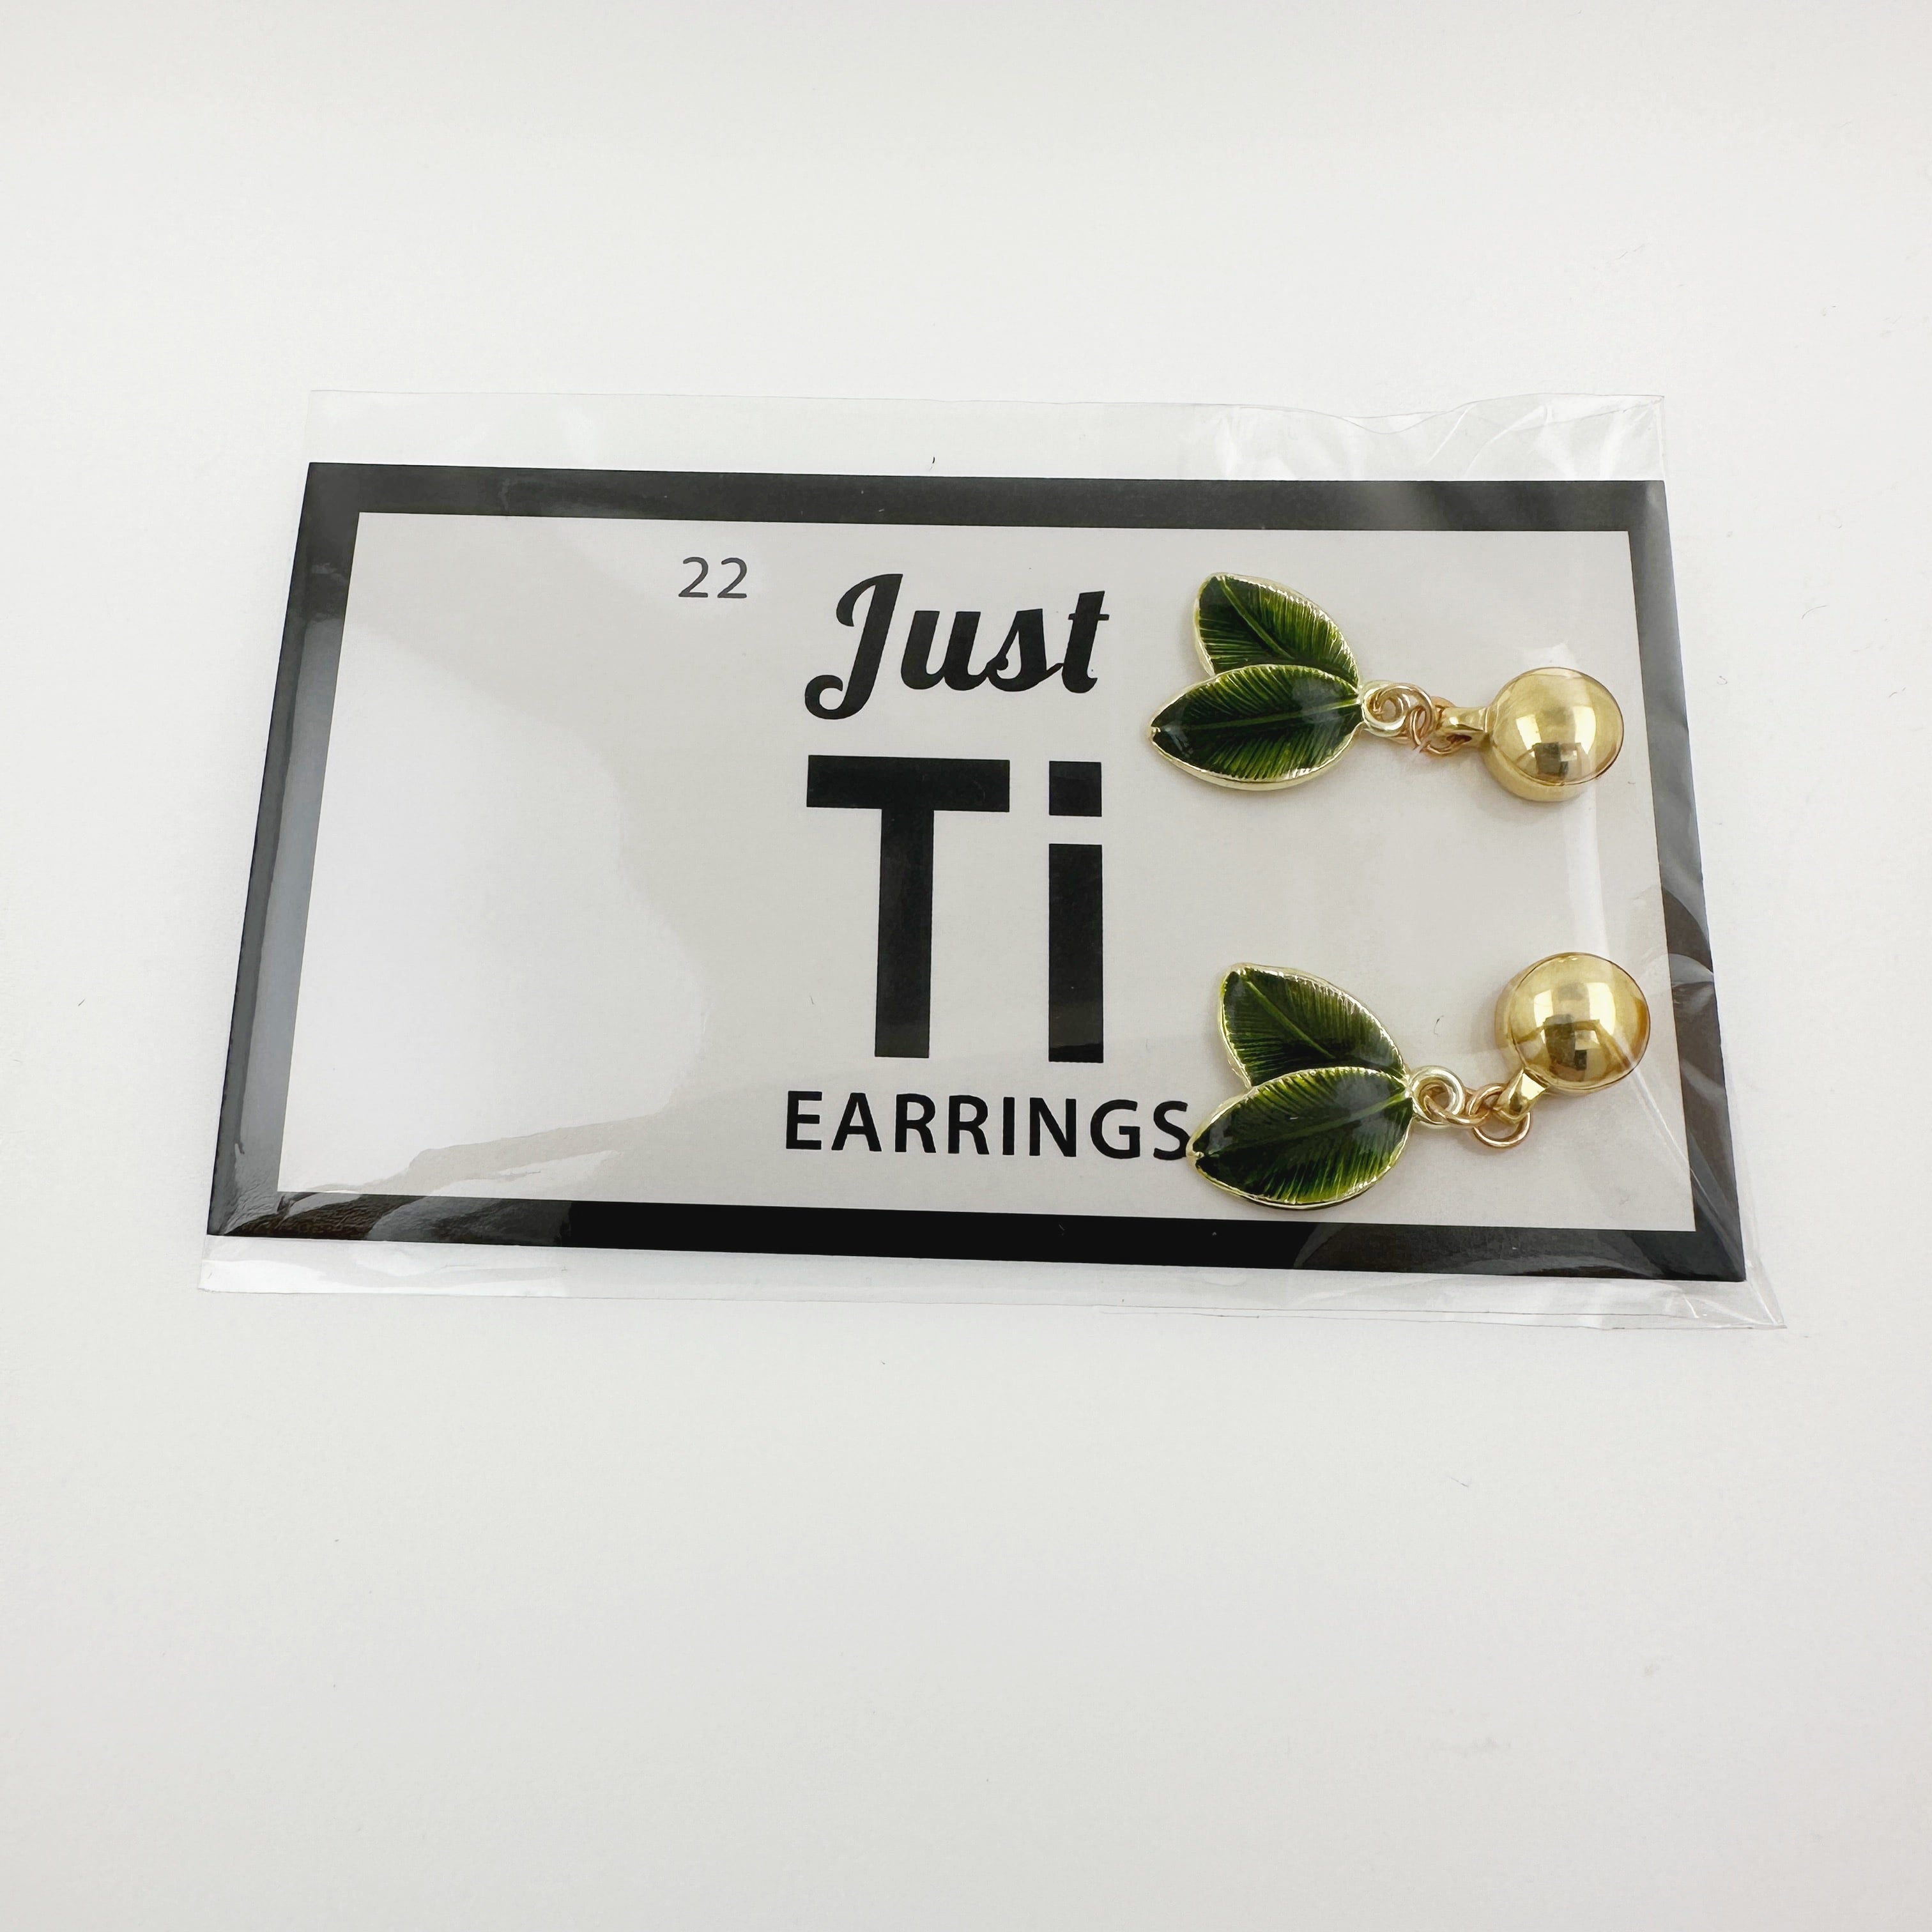 Ti-Go Leaf nature earrings